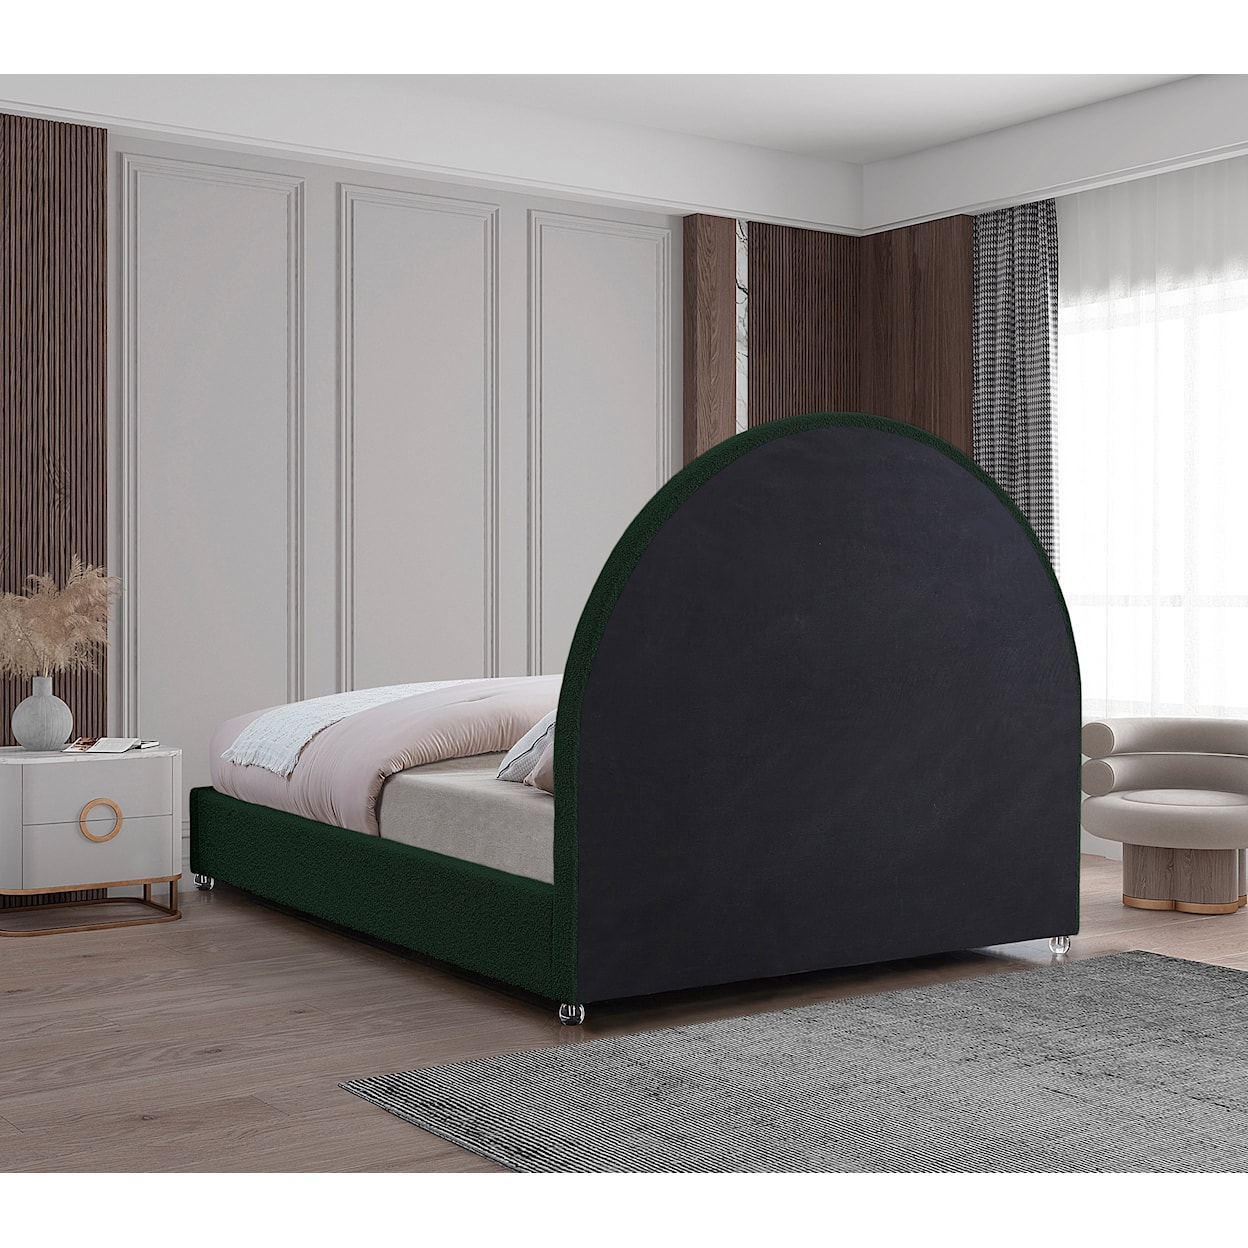 Meridian Furniture Milo Full Bed